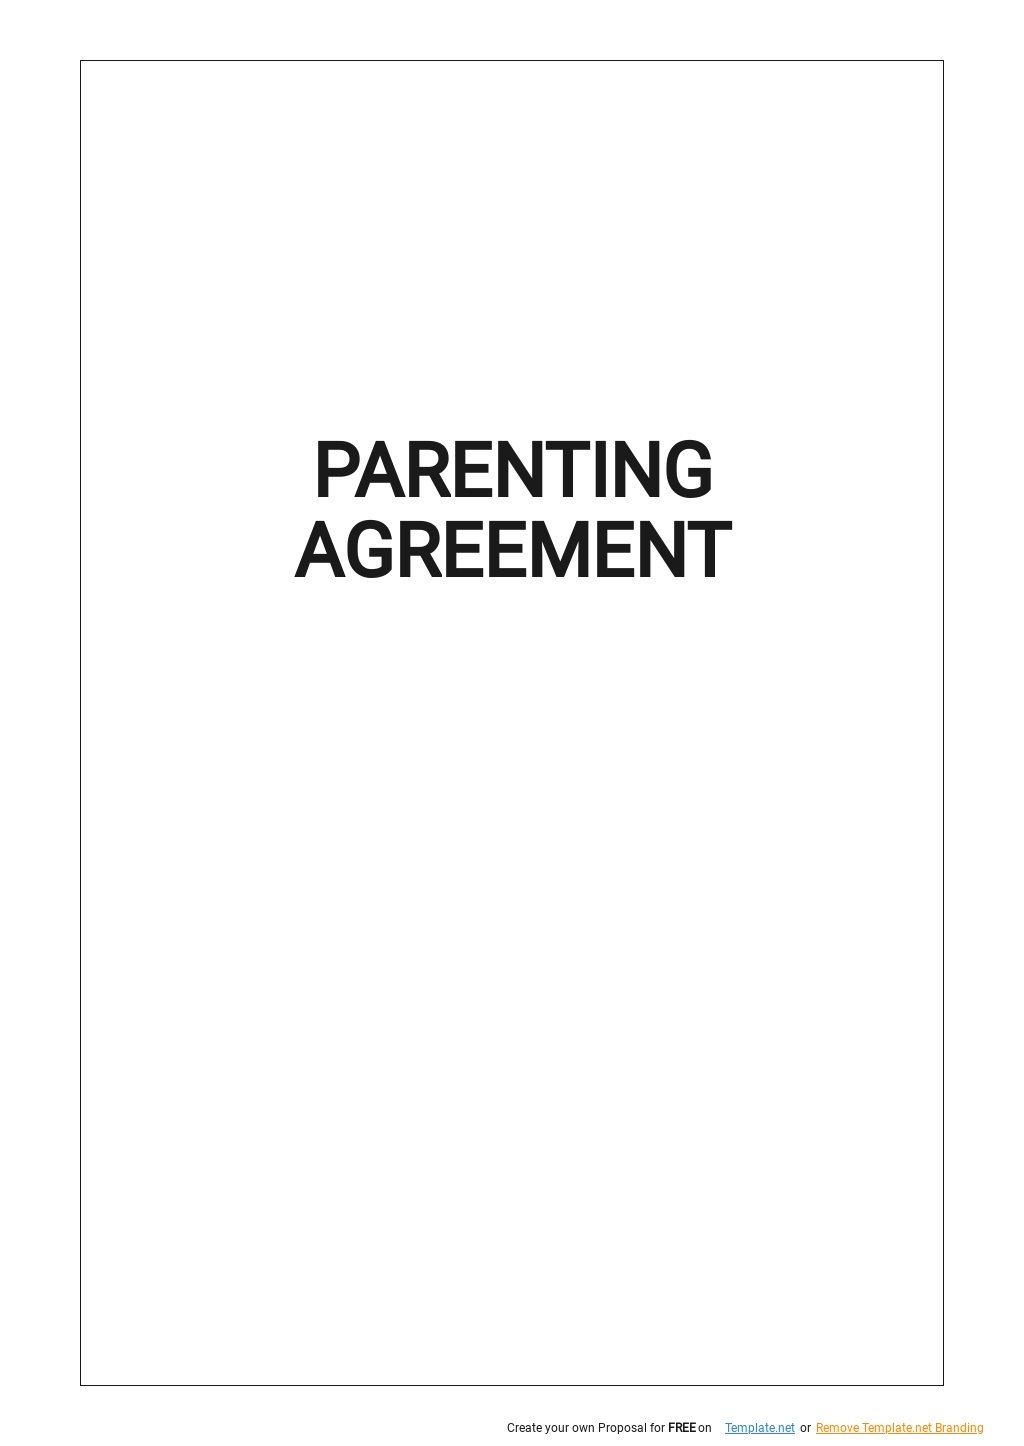 Free Sample Parenting Agreement Template Google Docs Word Apple